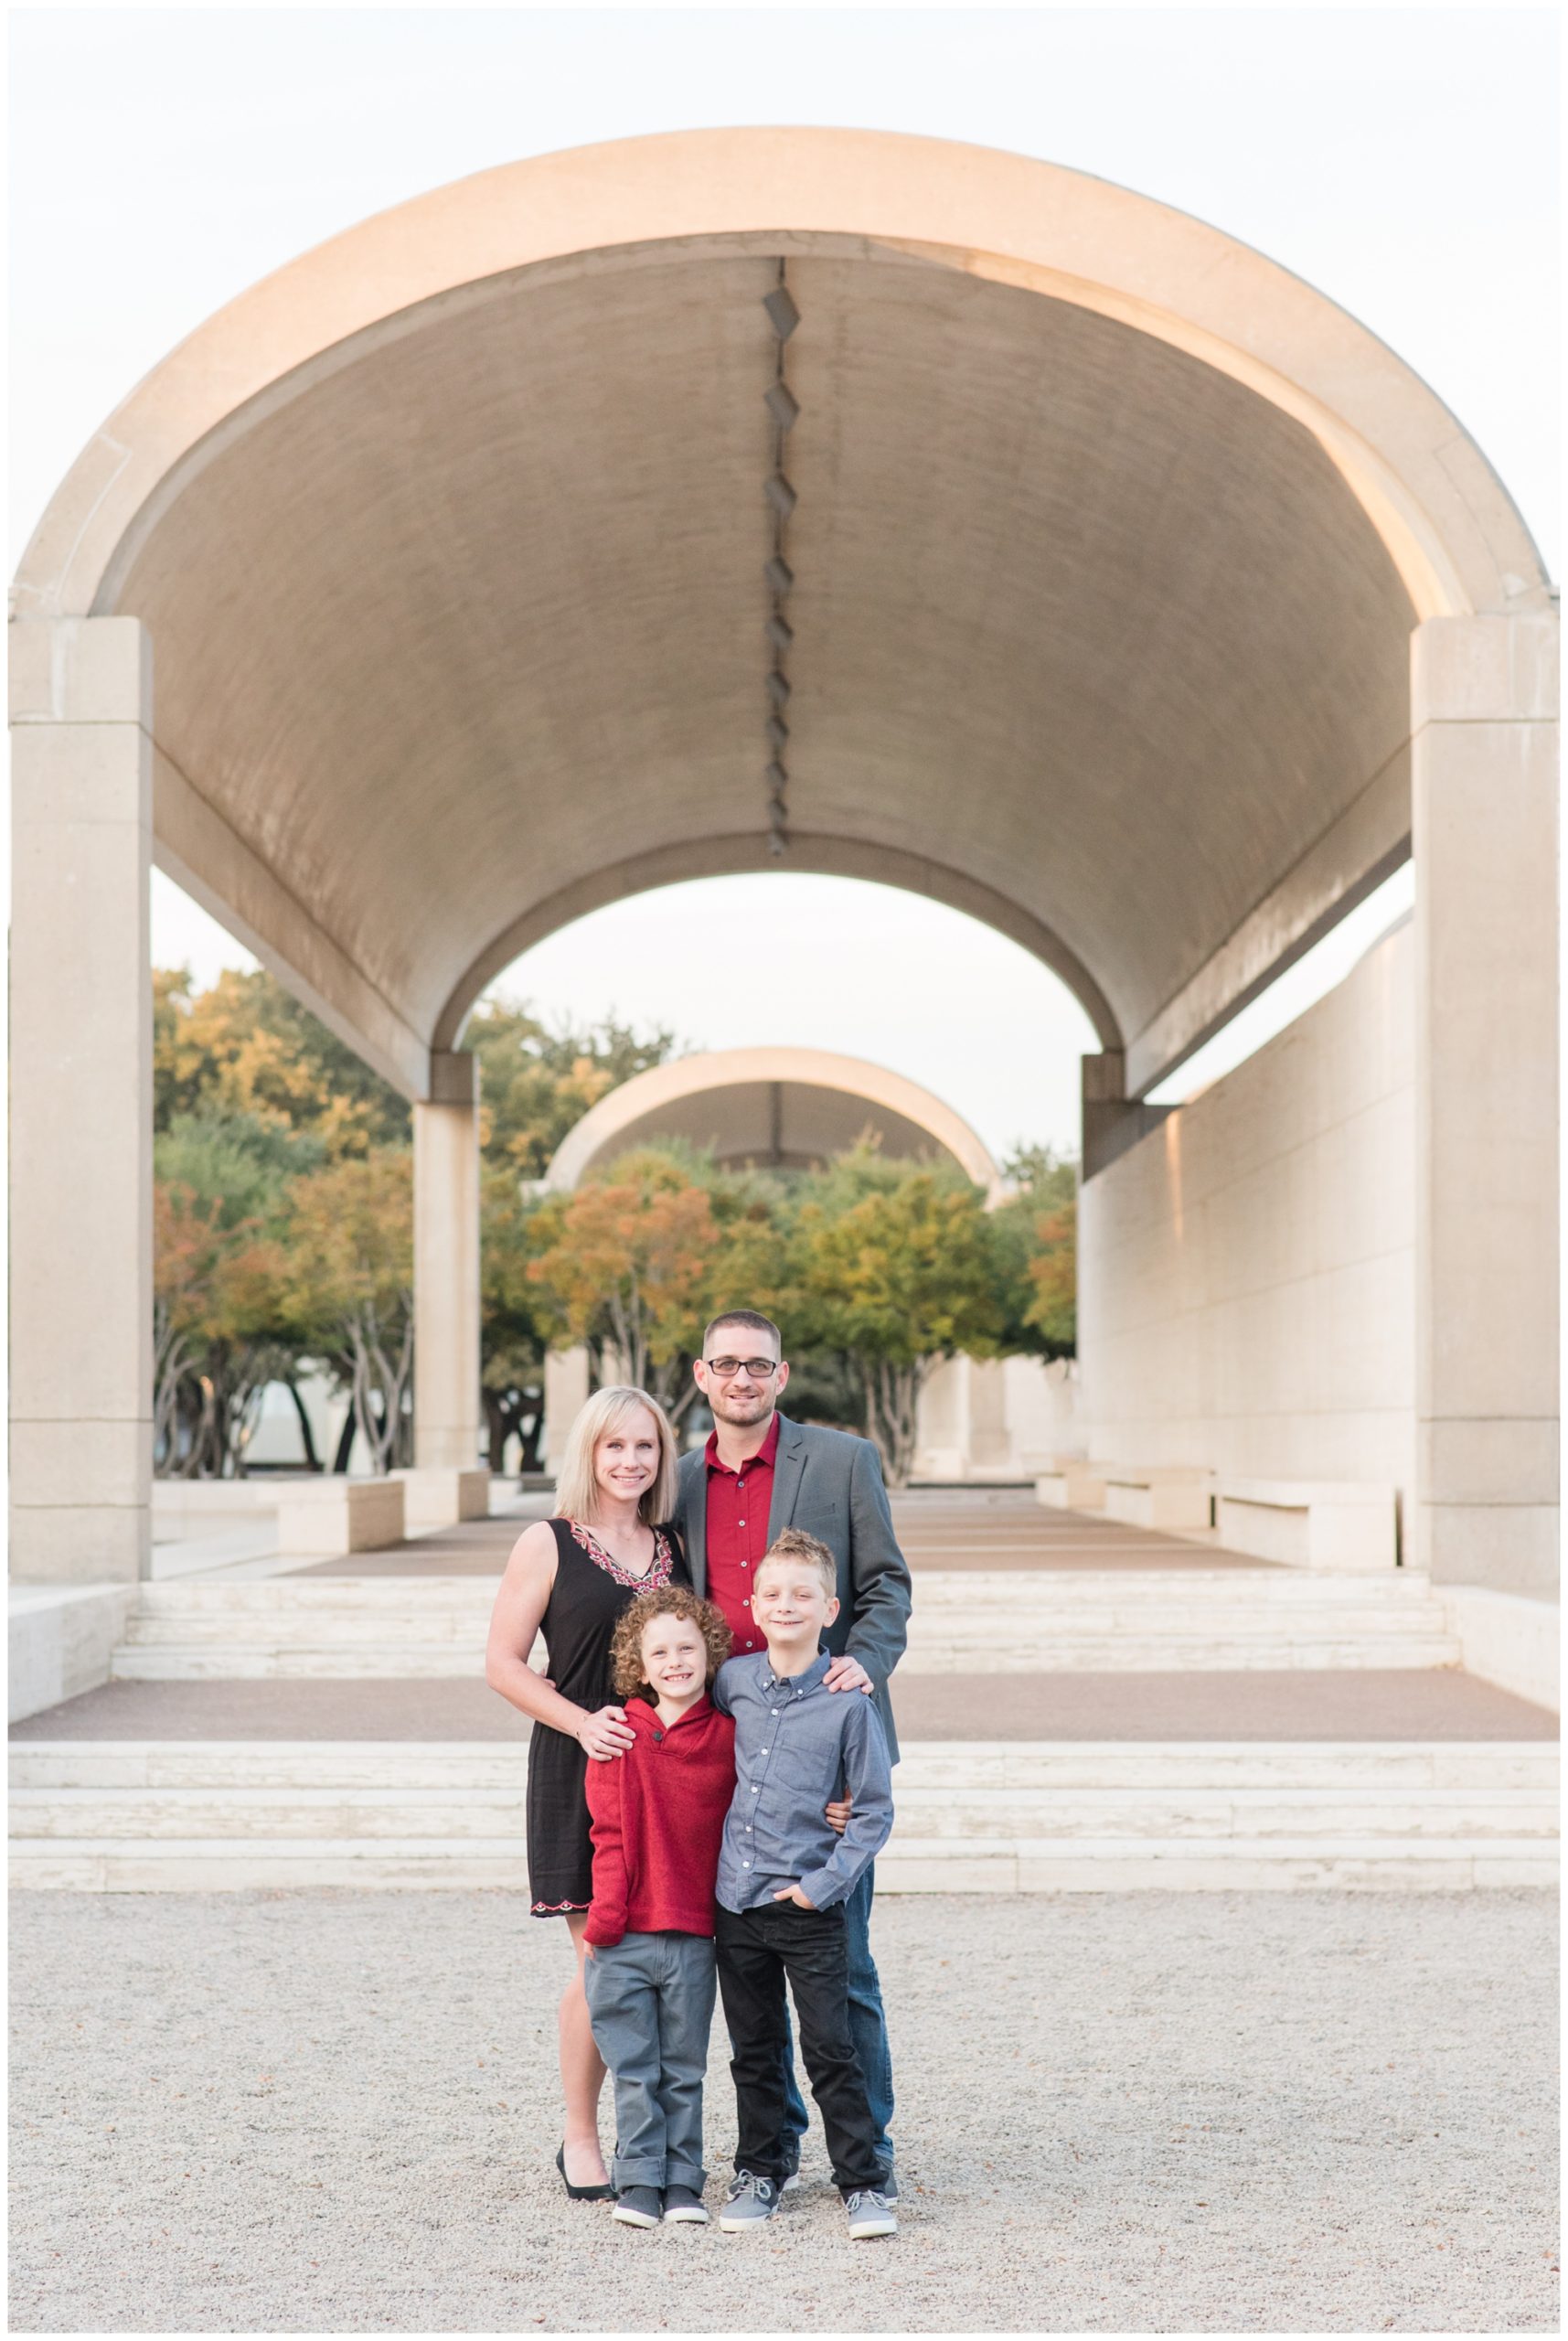 Kimbell Art Museum | Fort Worth Family Photographer | Fort Worth Photographer | Lauren Grimes Photography